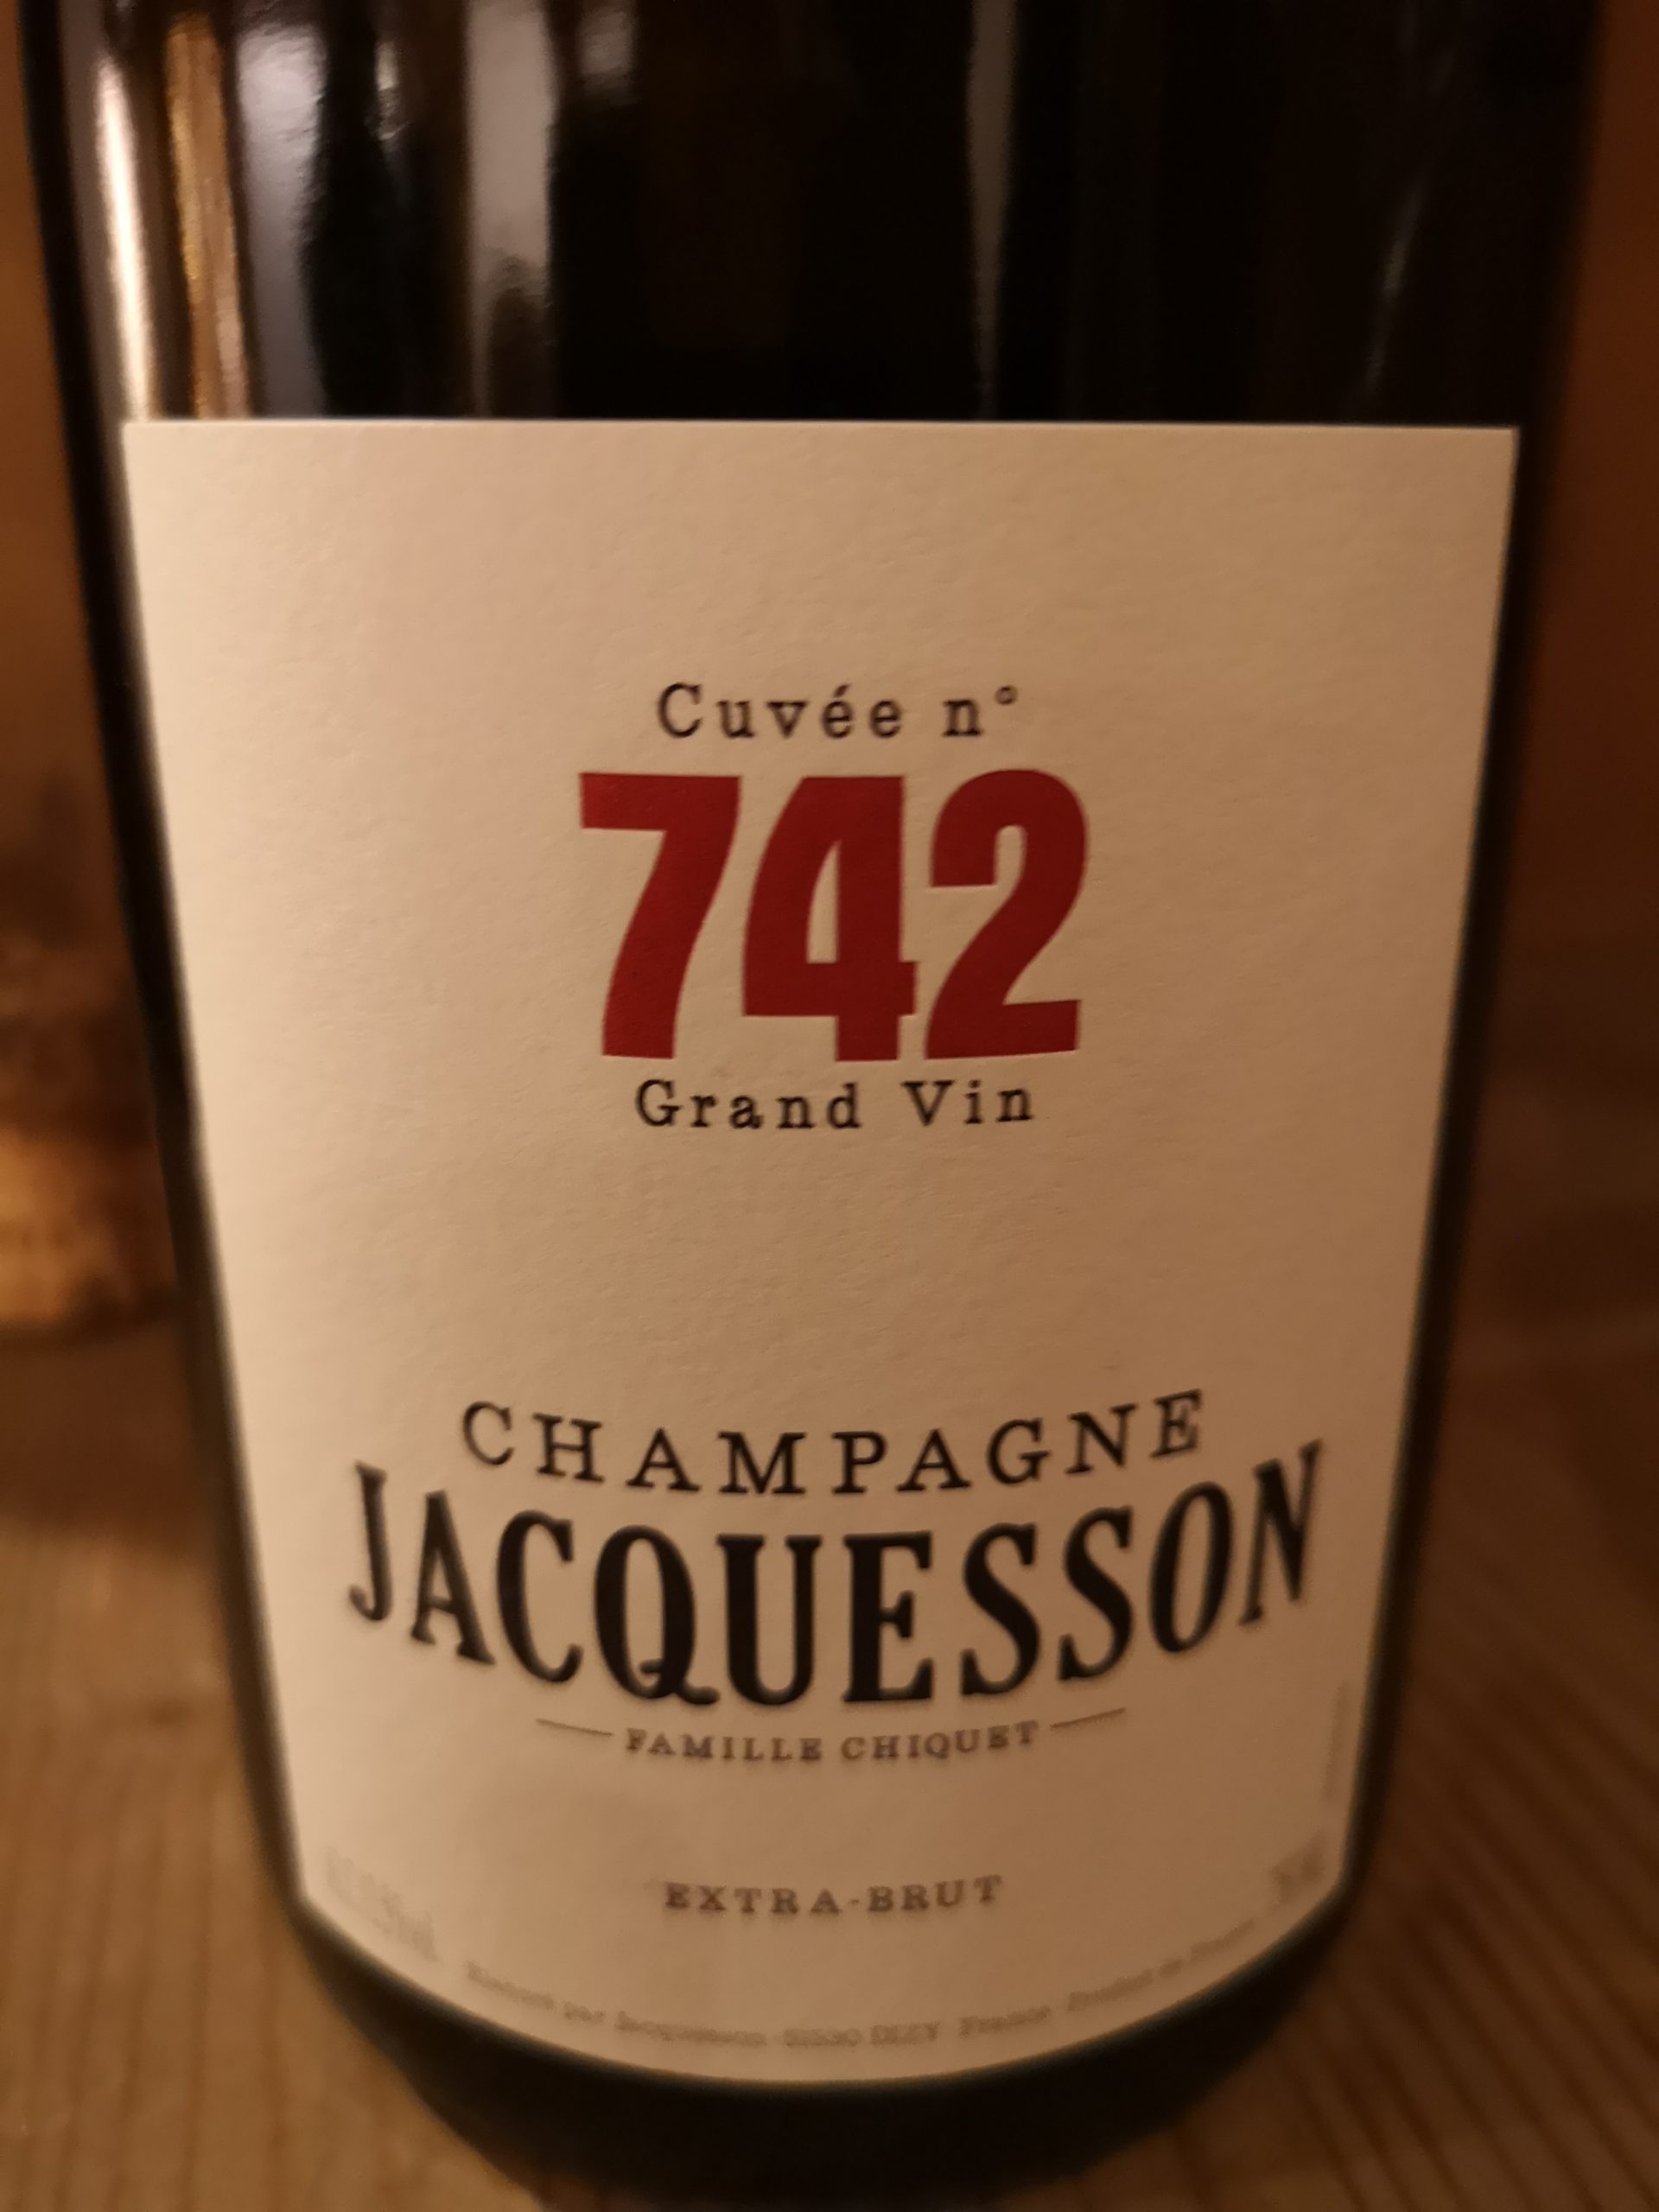 -nv- Champagne Jacquesson Cuvée n° 742 Extra-Brut | Jacquesson